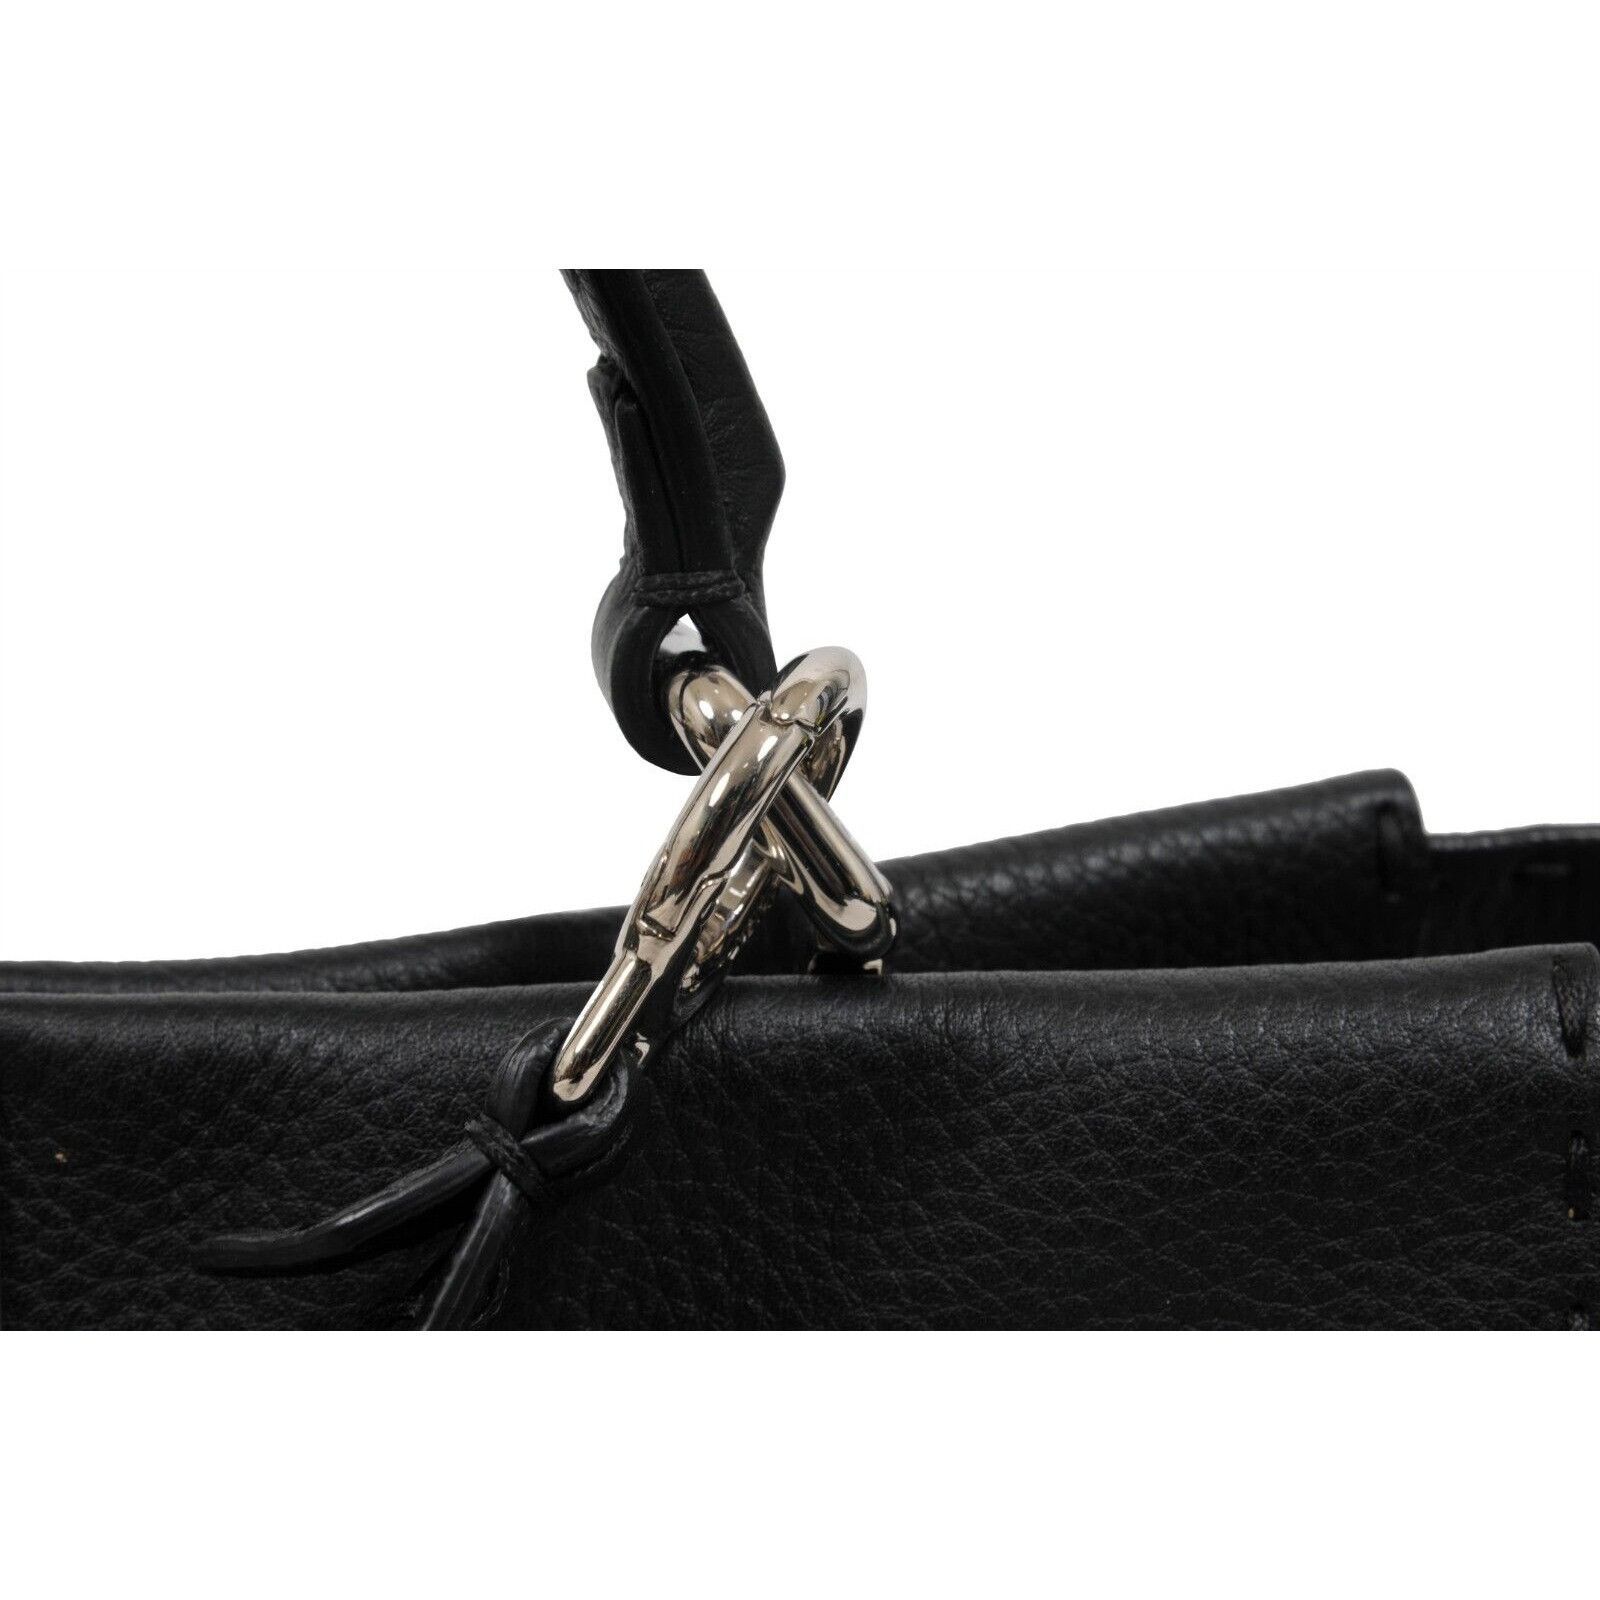 Fendi Peekaboo Satchel Tote Large Black Leather Shoulder Bag Size ONE SIZE - 3 Thumbnail